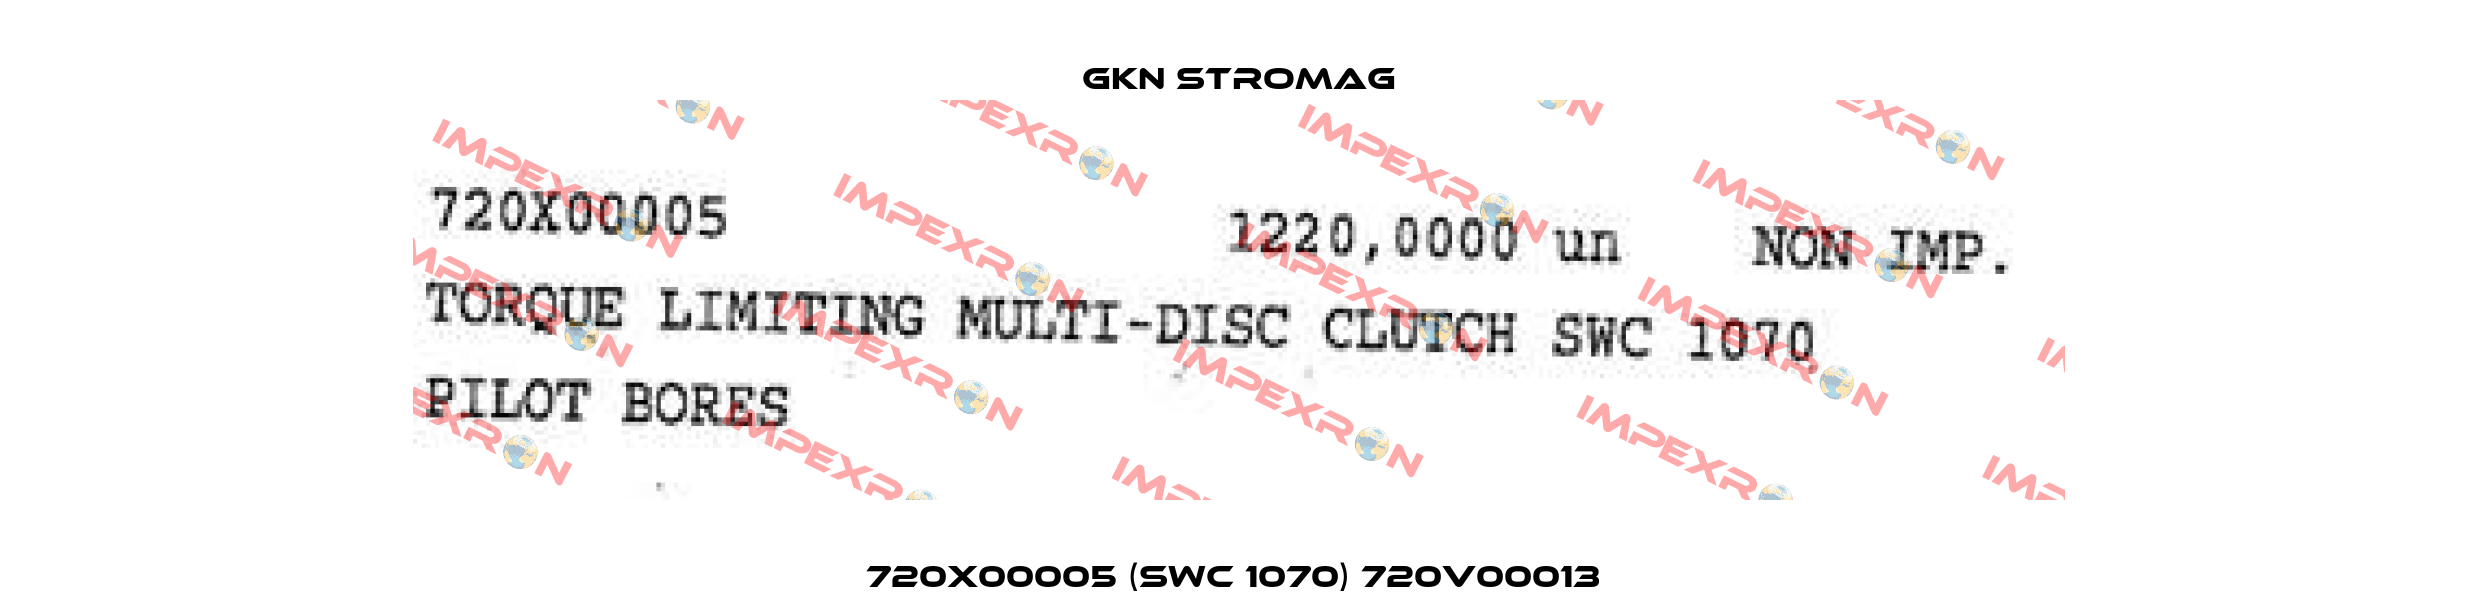 720X00005 (SWC 1070) 720V00013  GKN Stromag